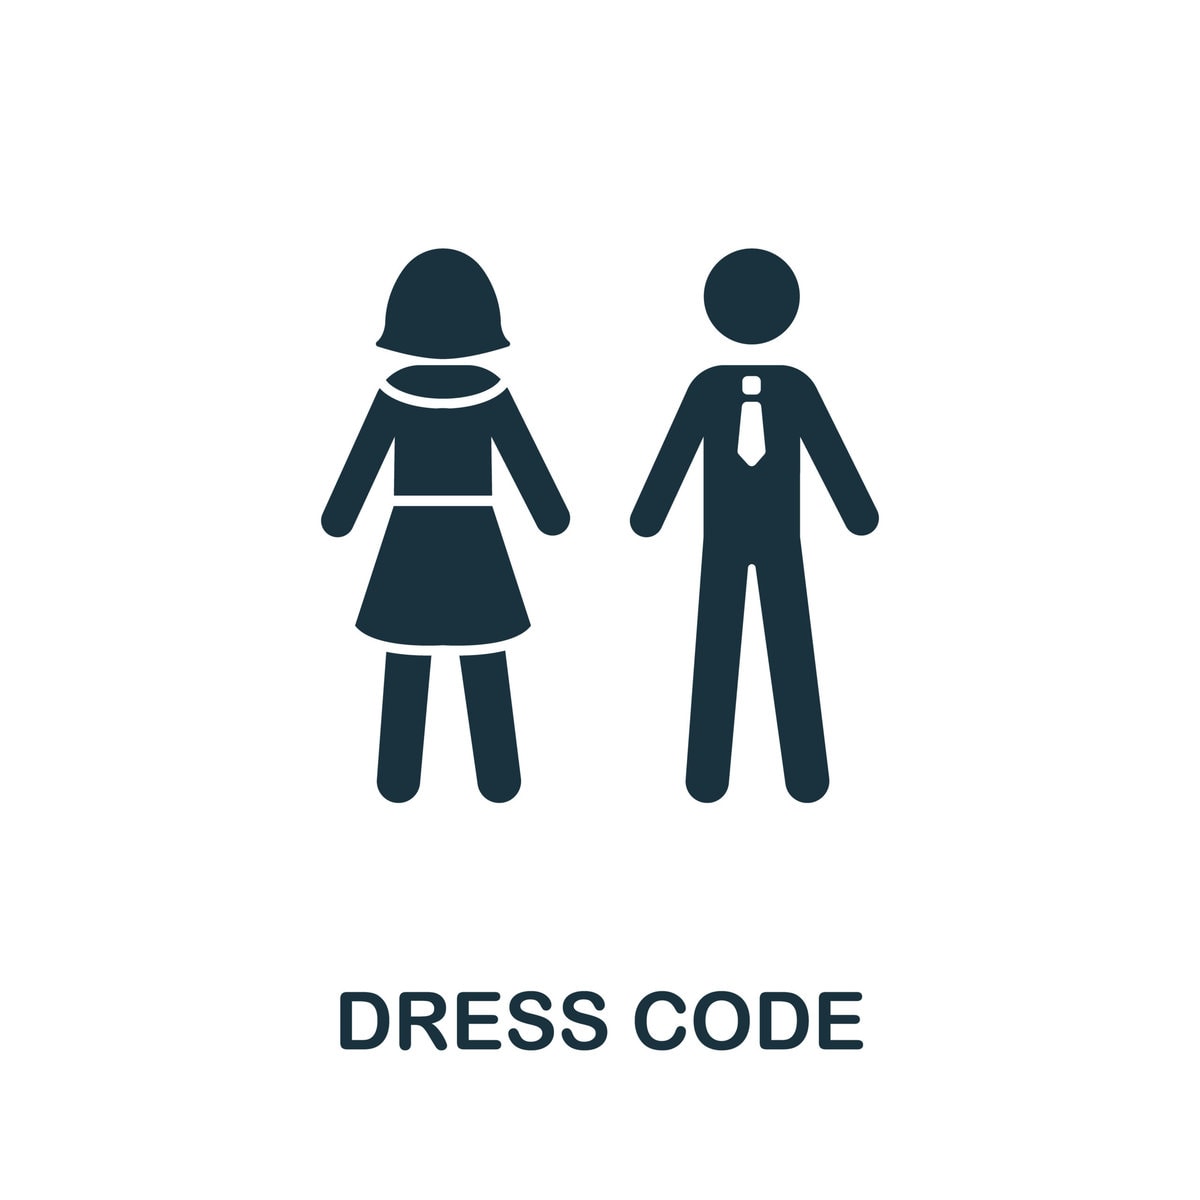 Why Do We Need A Dress Code